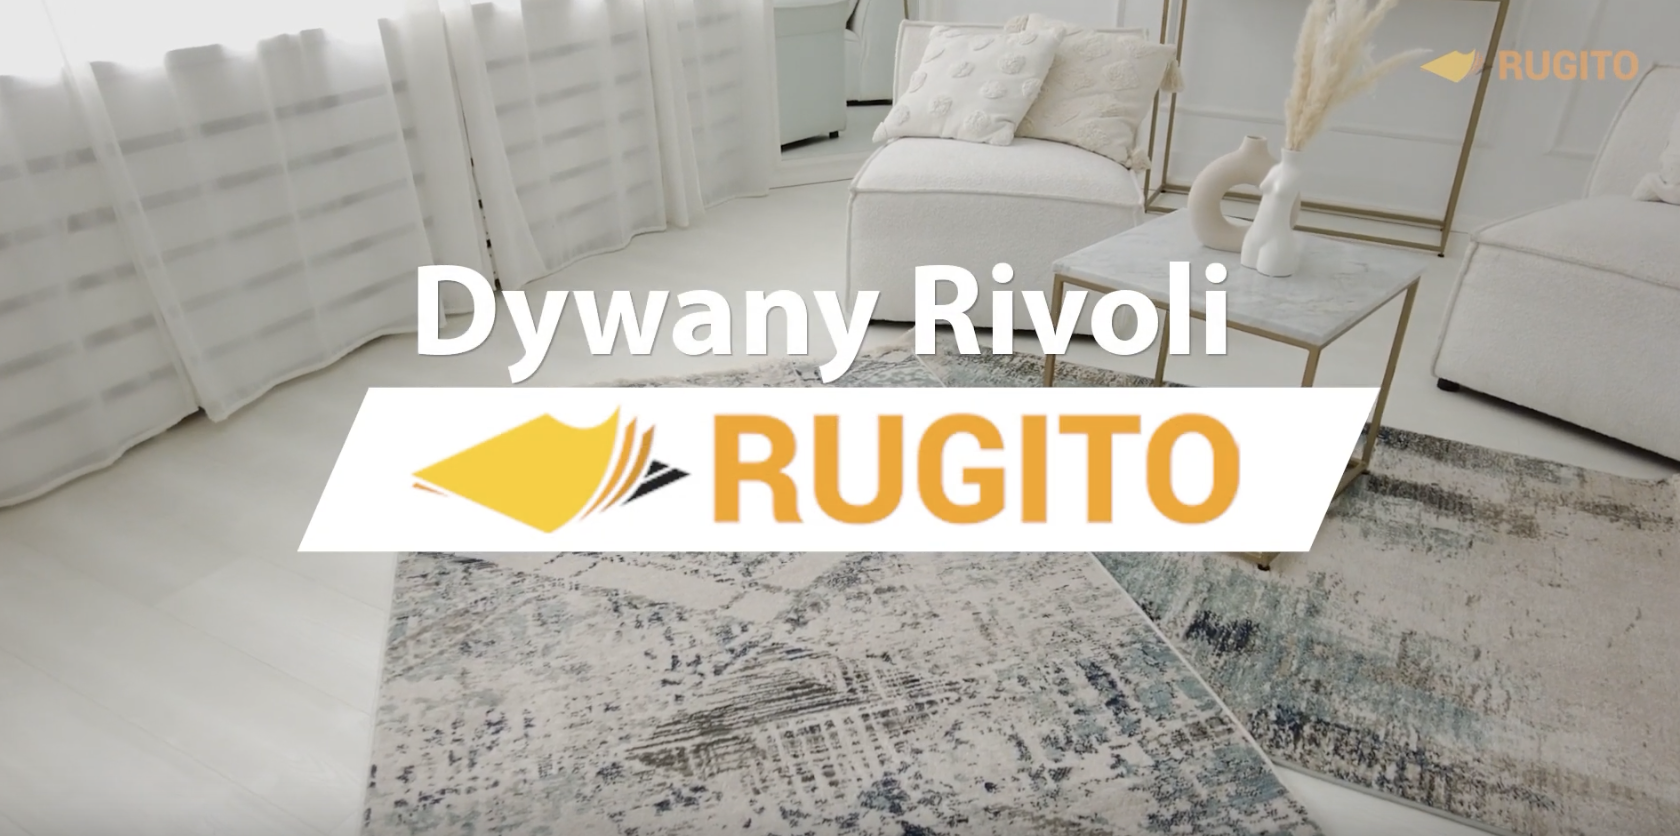 Dywany Rivoli - rugito.pl - Rugito Radosław Bartosik